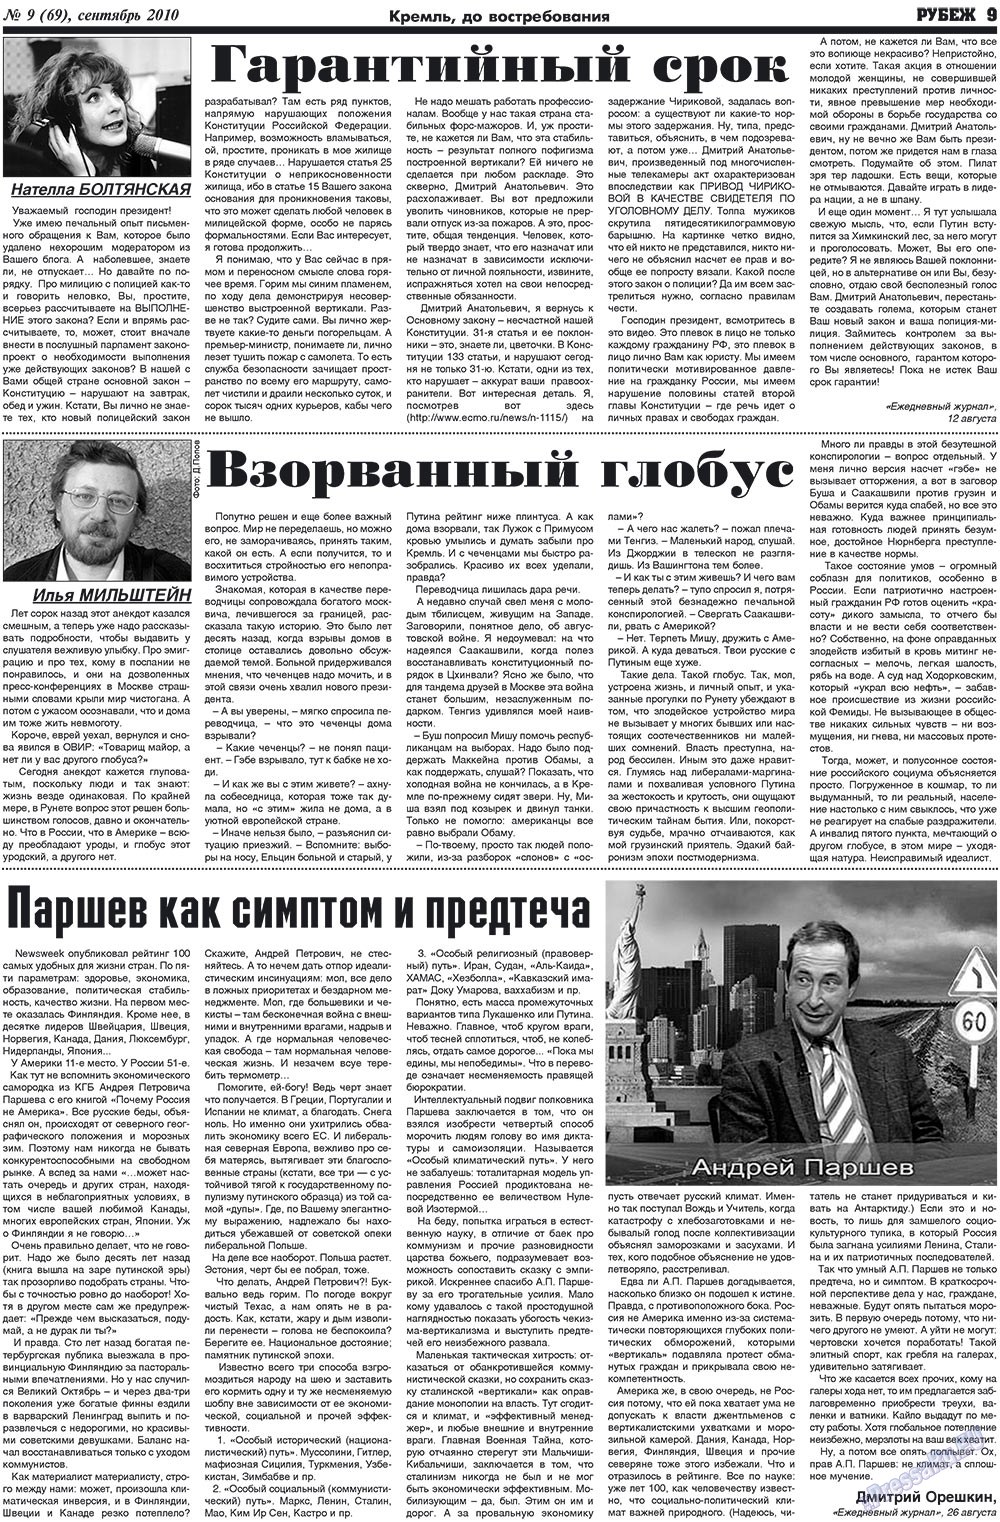 Рубеж, газета. 2010 №9 стр.9